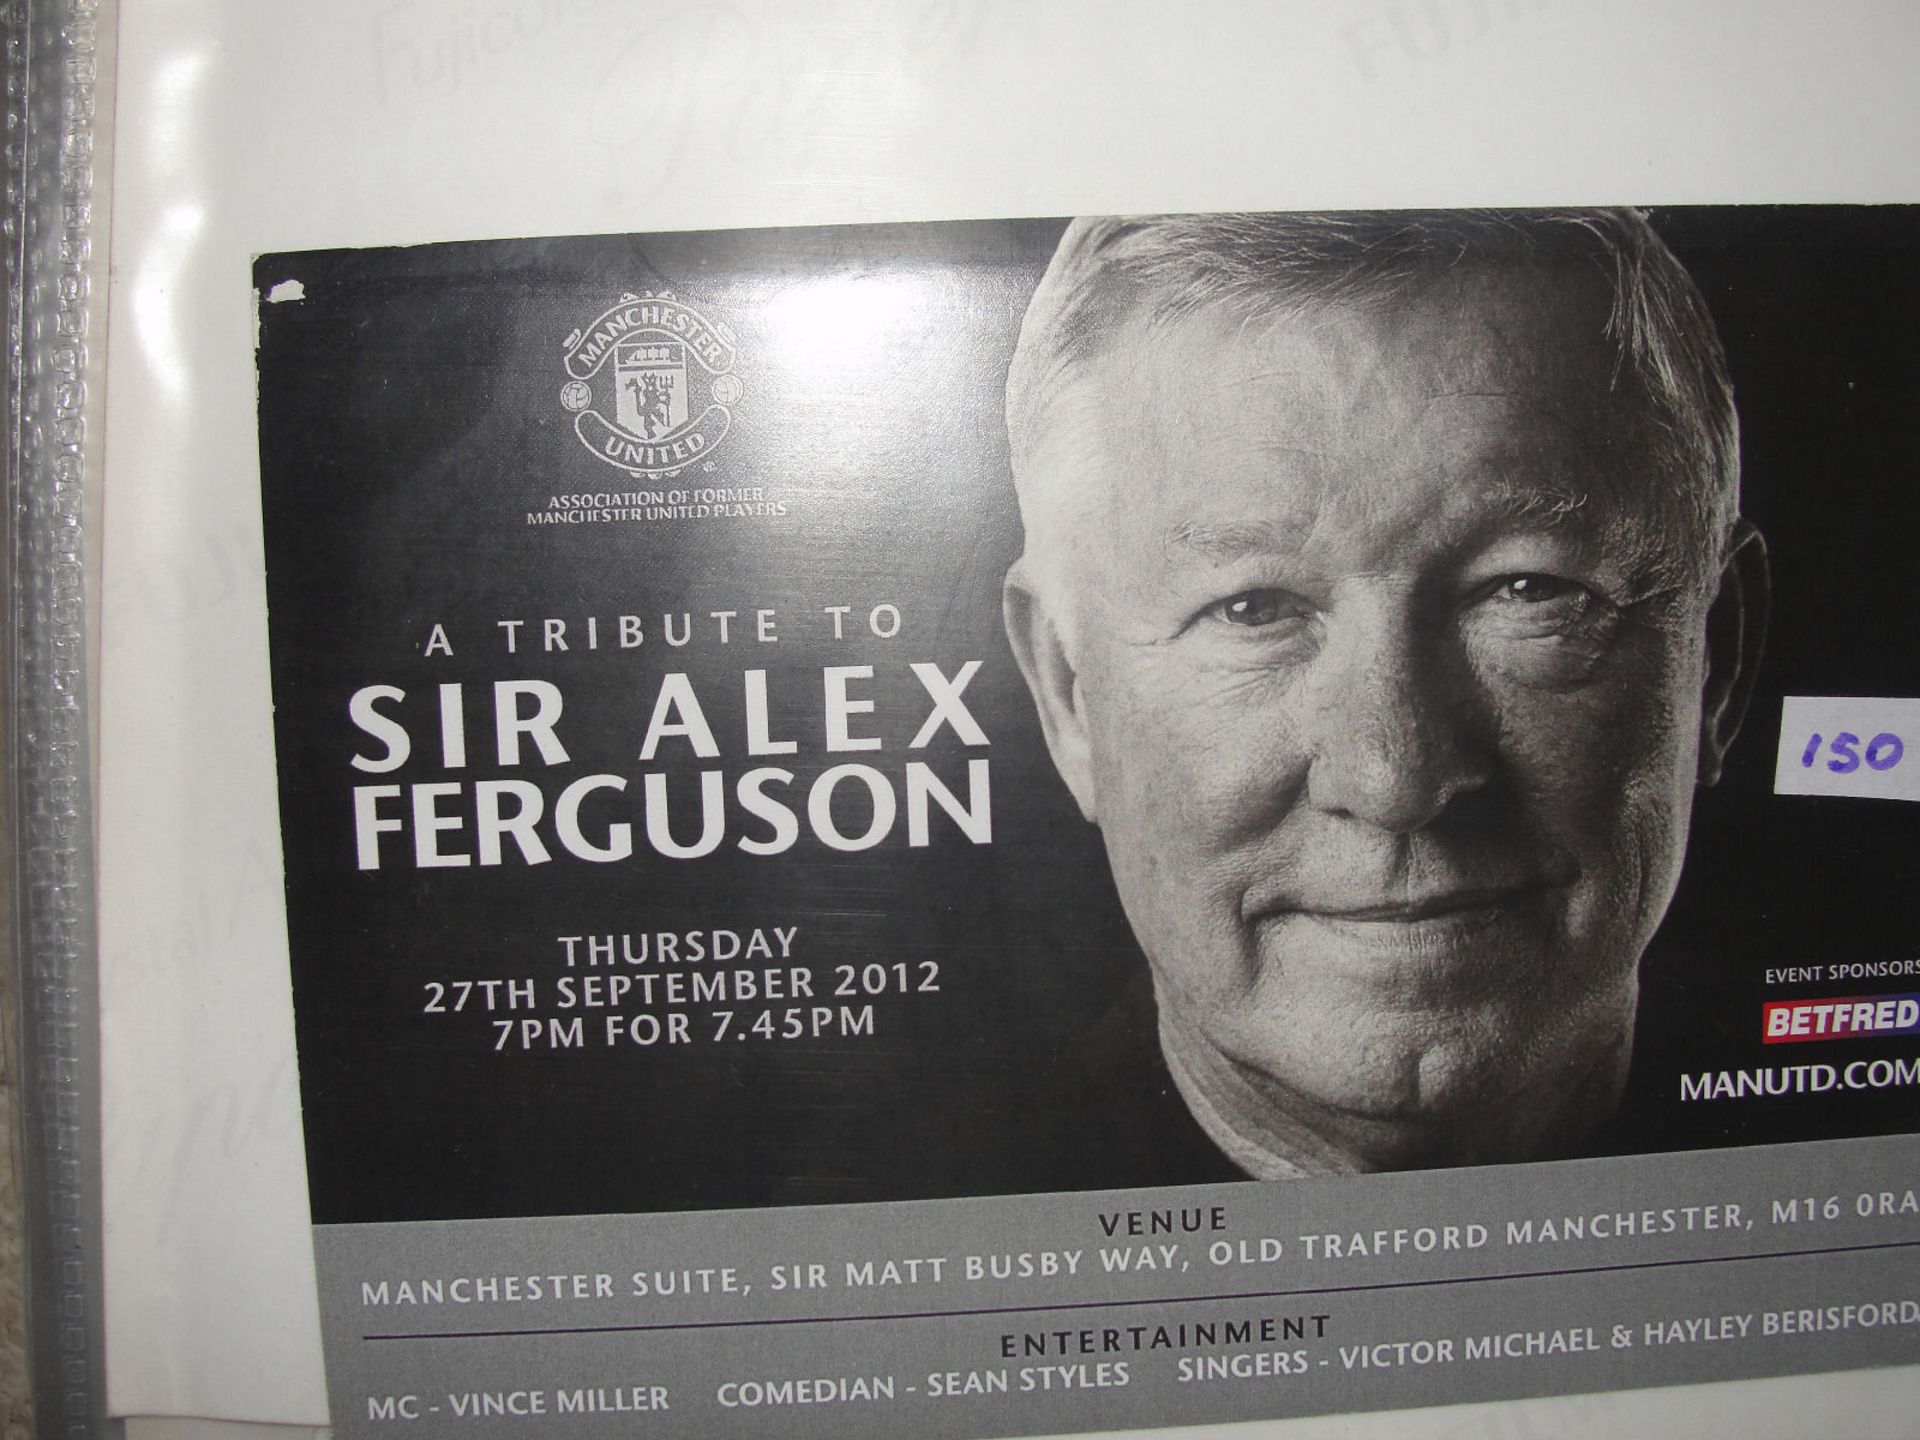 Manchester United FC Memorabilia/Signed Photograph - Image 3 of 8